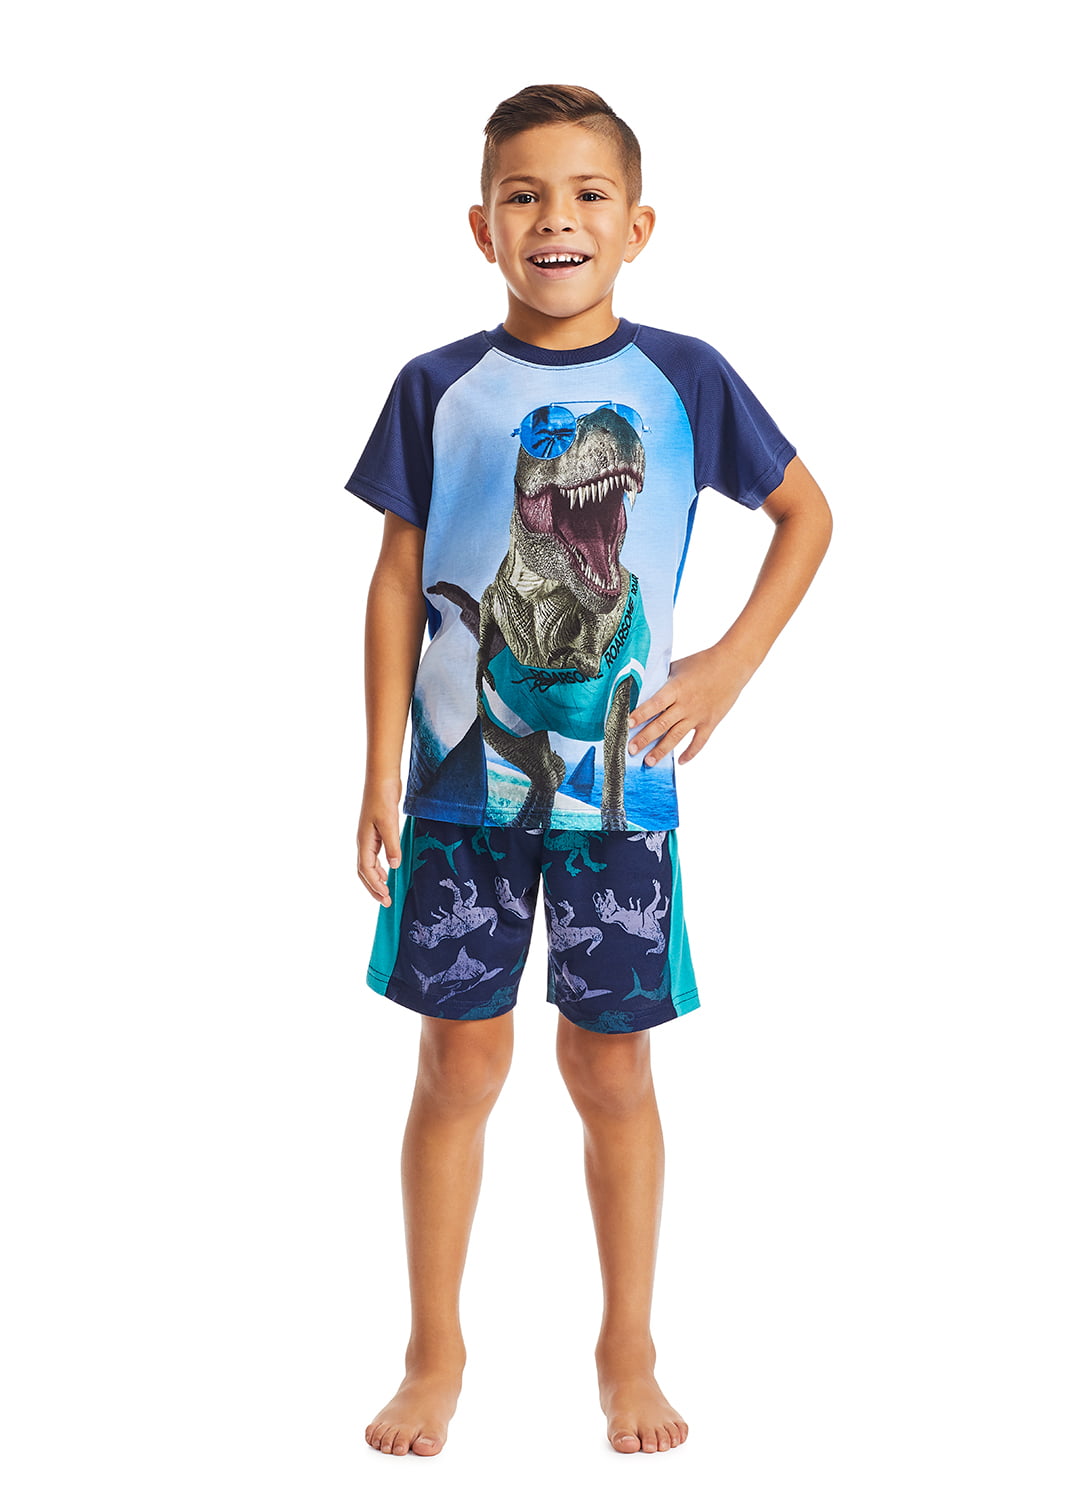 Boys Pyjamas Set 100% Cotton Glow in The Dark Dinosaur Pjs Toddler Long Sleeve Sleepwear 2 Piece Outfit 1 to 10 Years 